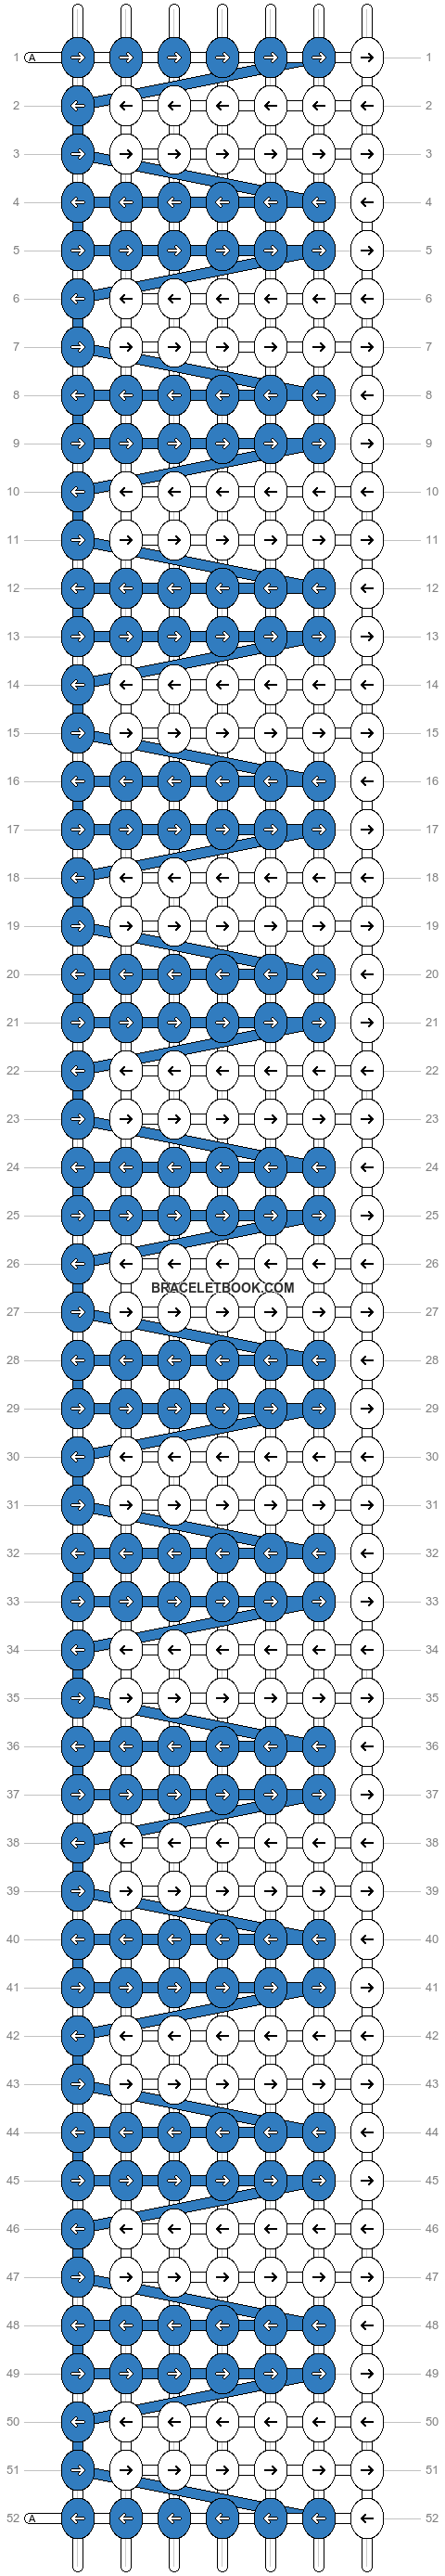 Alpha pattern #15234 variation #4603 pattern